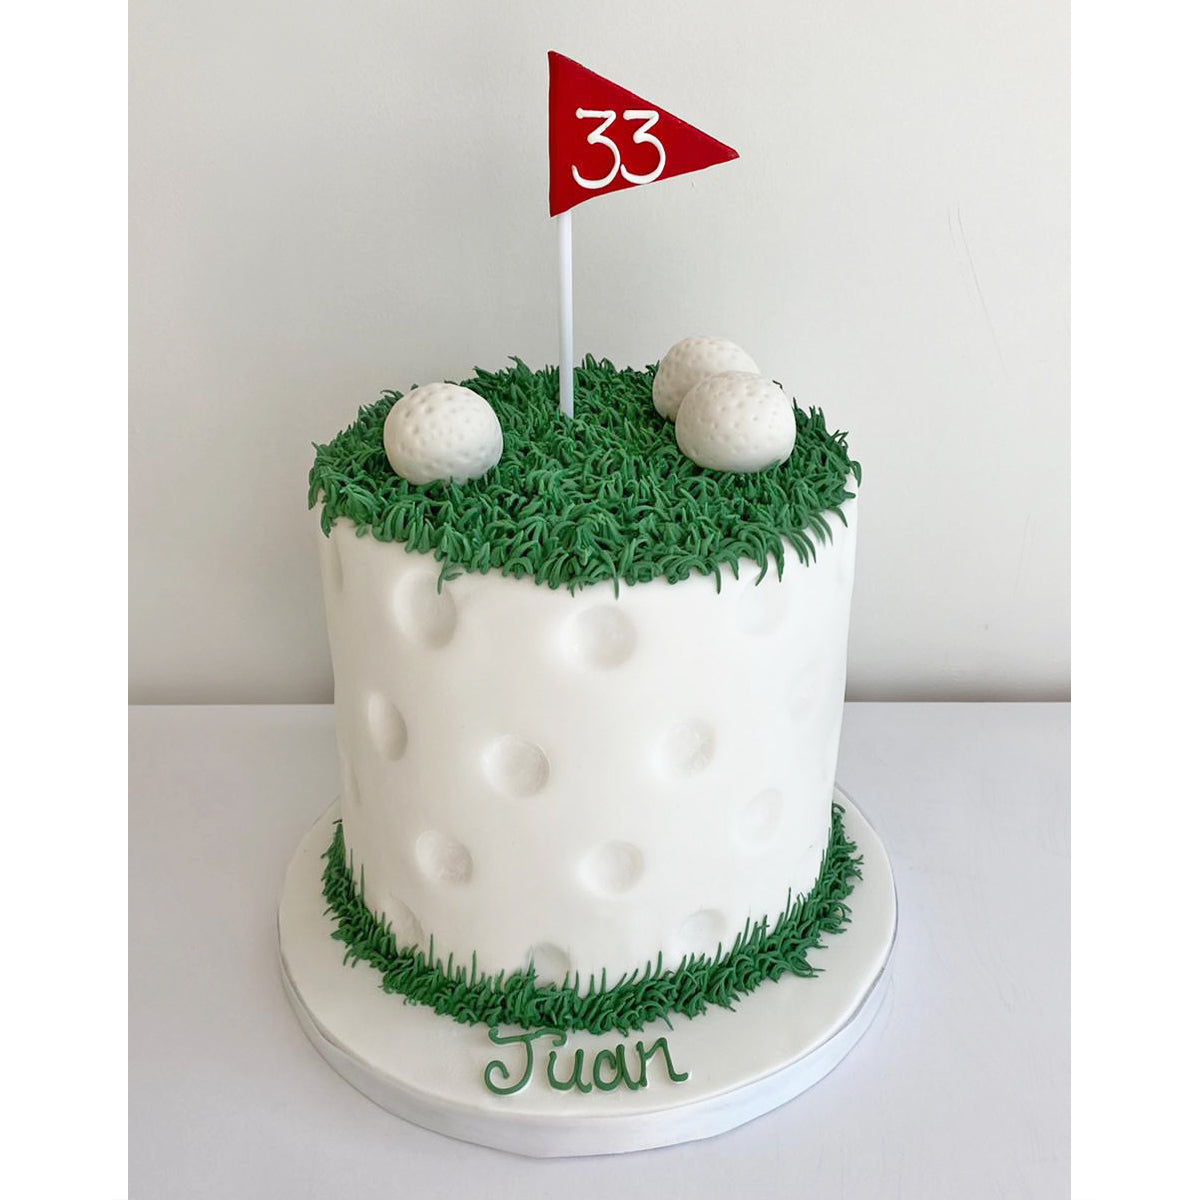 Golf Lover's Celebration Cake